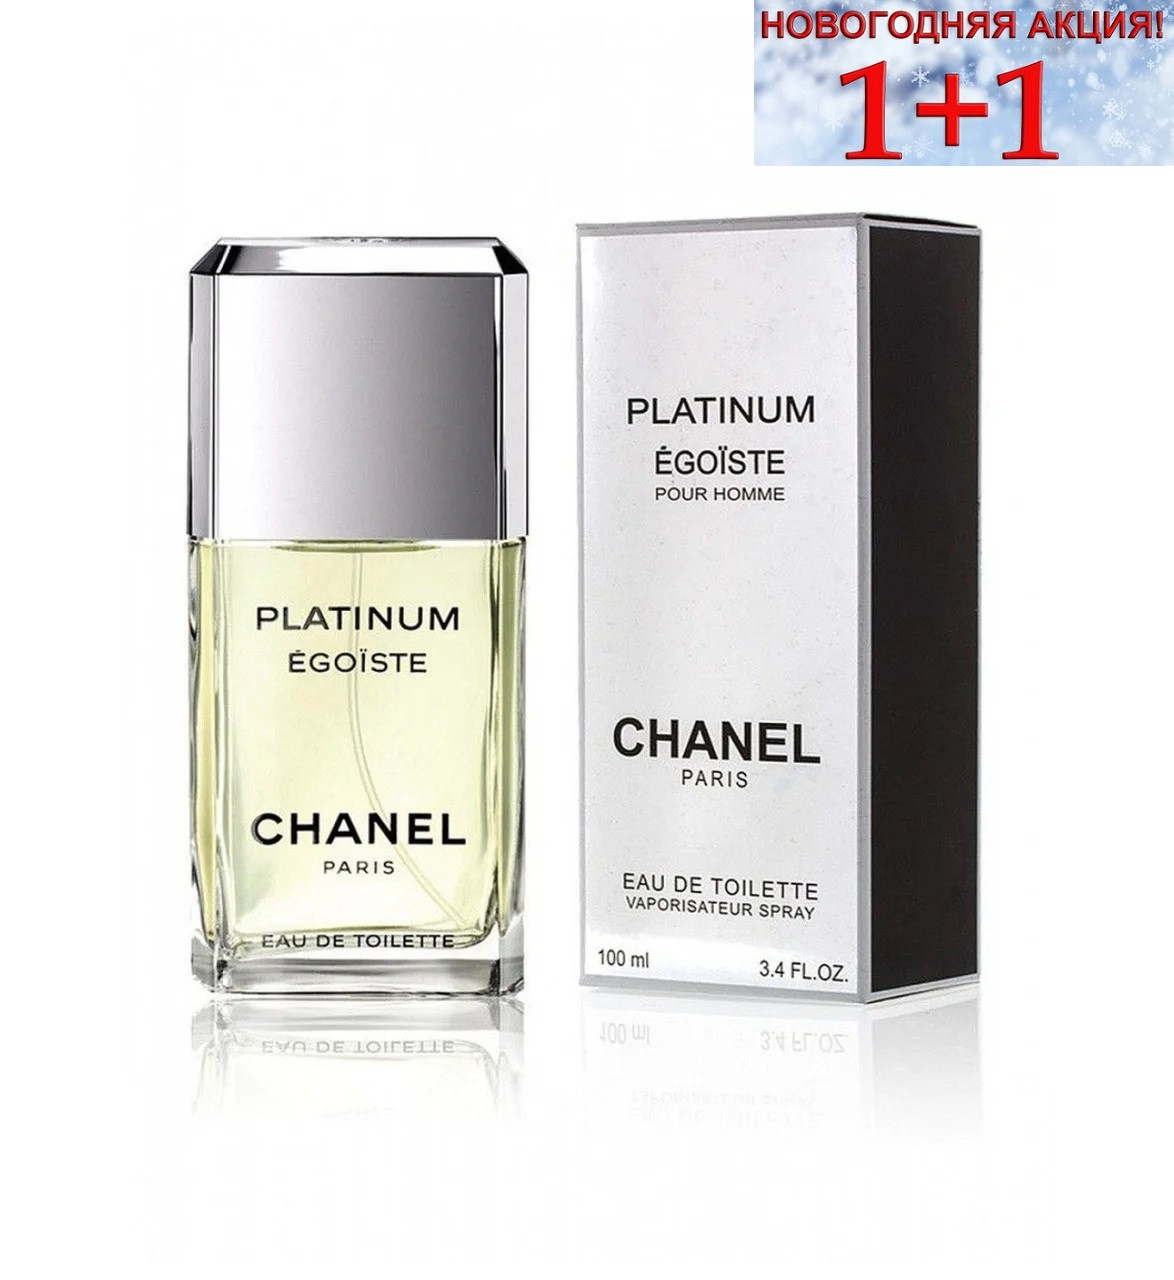 Chanel "Egoiste Platinum" 100 ml